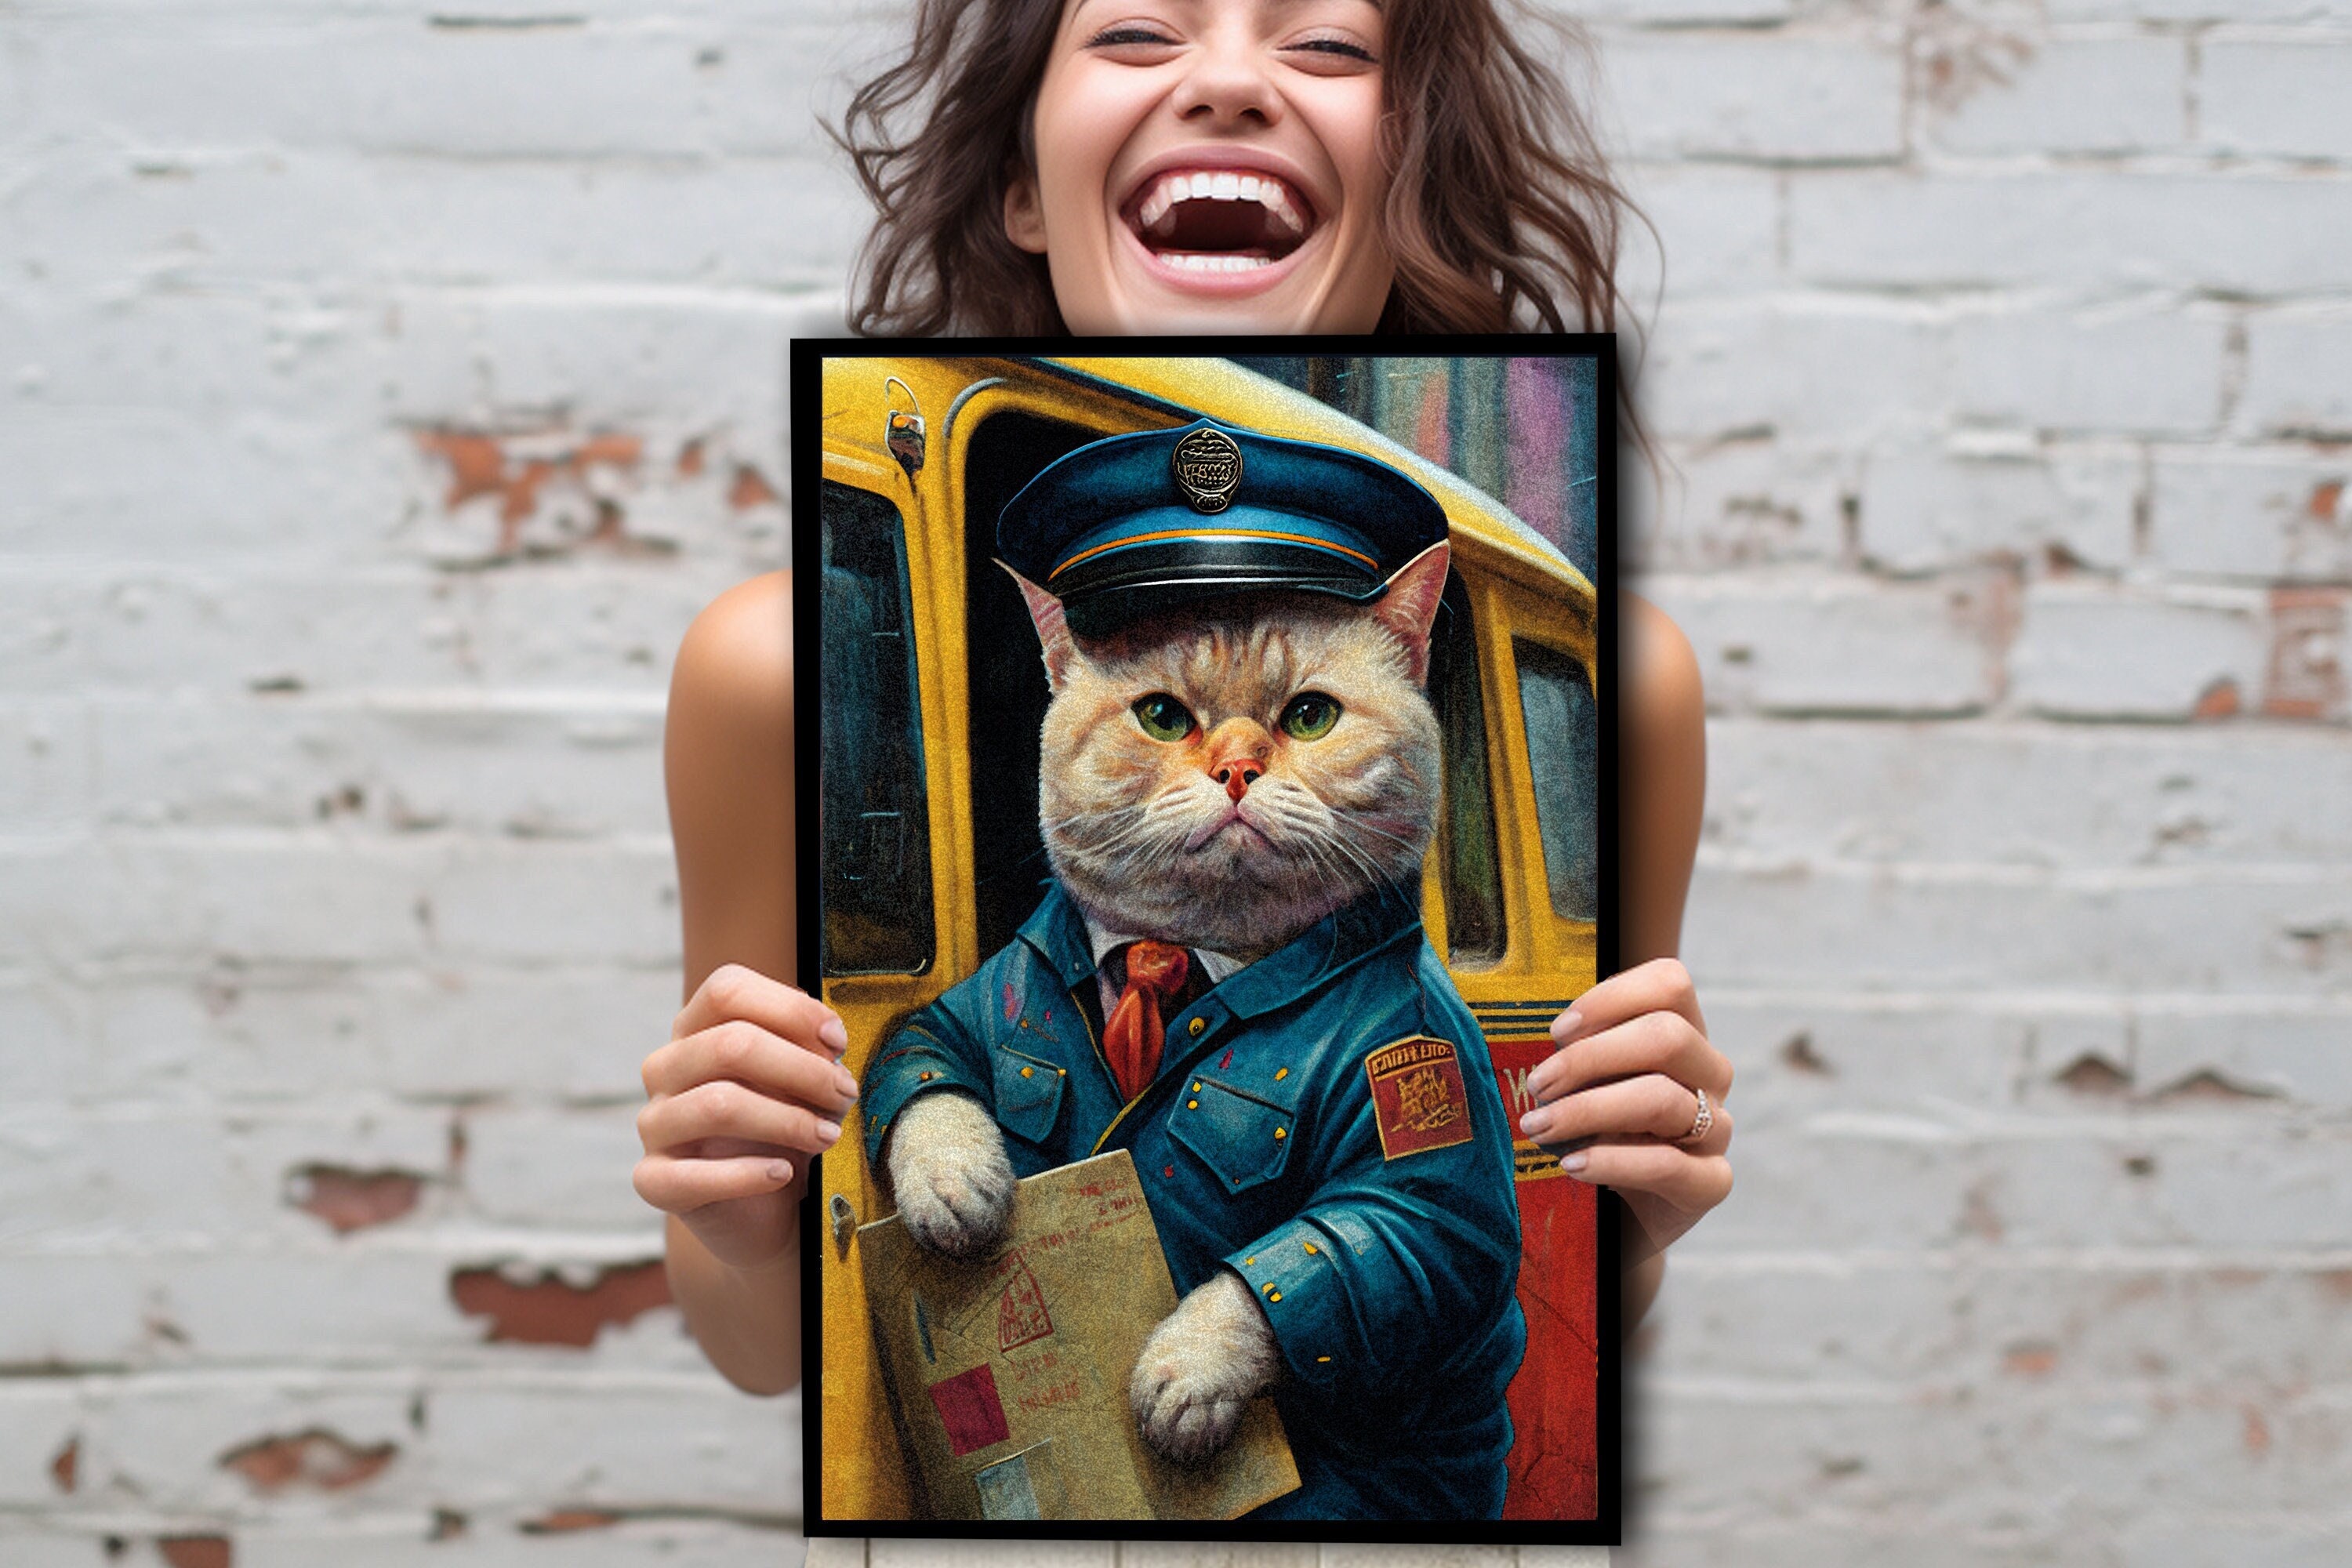 cat meme face, funny cat Photographic Print for Sale by jassine11